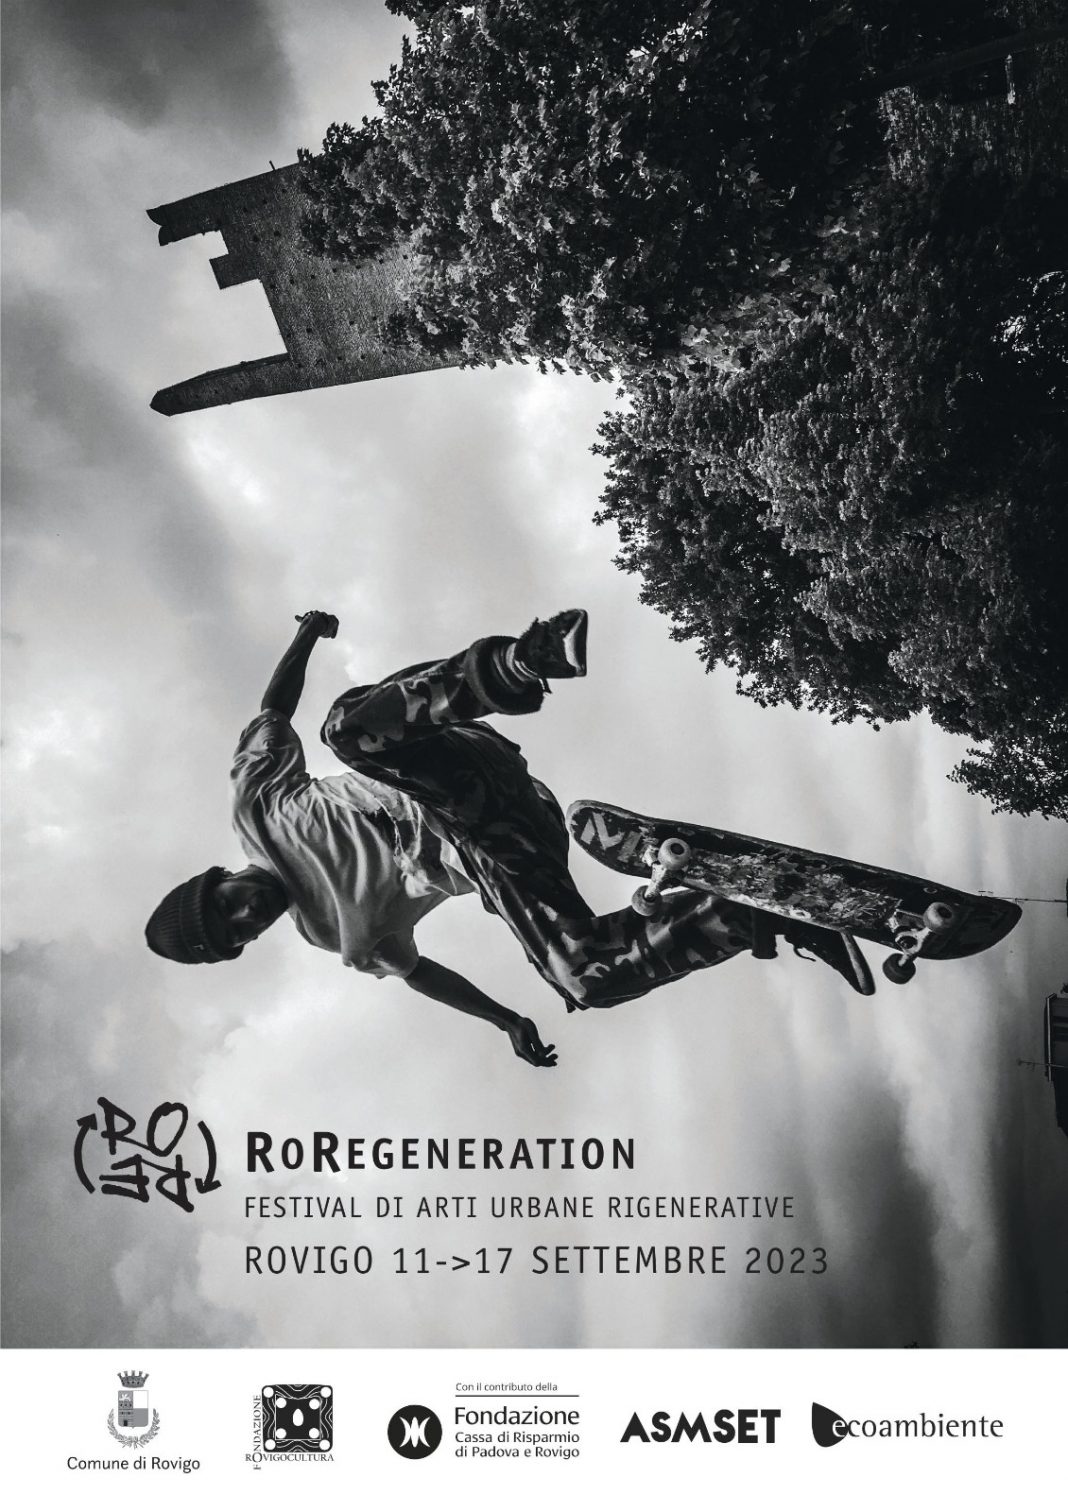 RoRegeneration – Festival di arti urbane rigenerativehttps://www.exibart.com/repository/media/formidable/11/img/cb9/RoRe-festival-locandina-2023-1068x1512.jpg